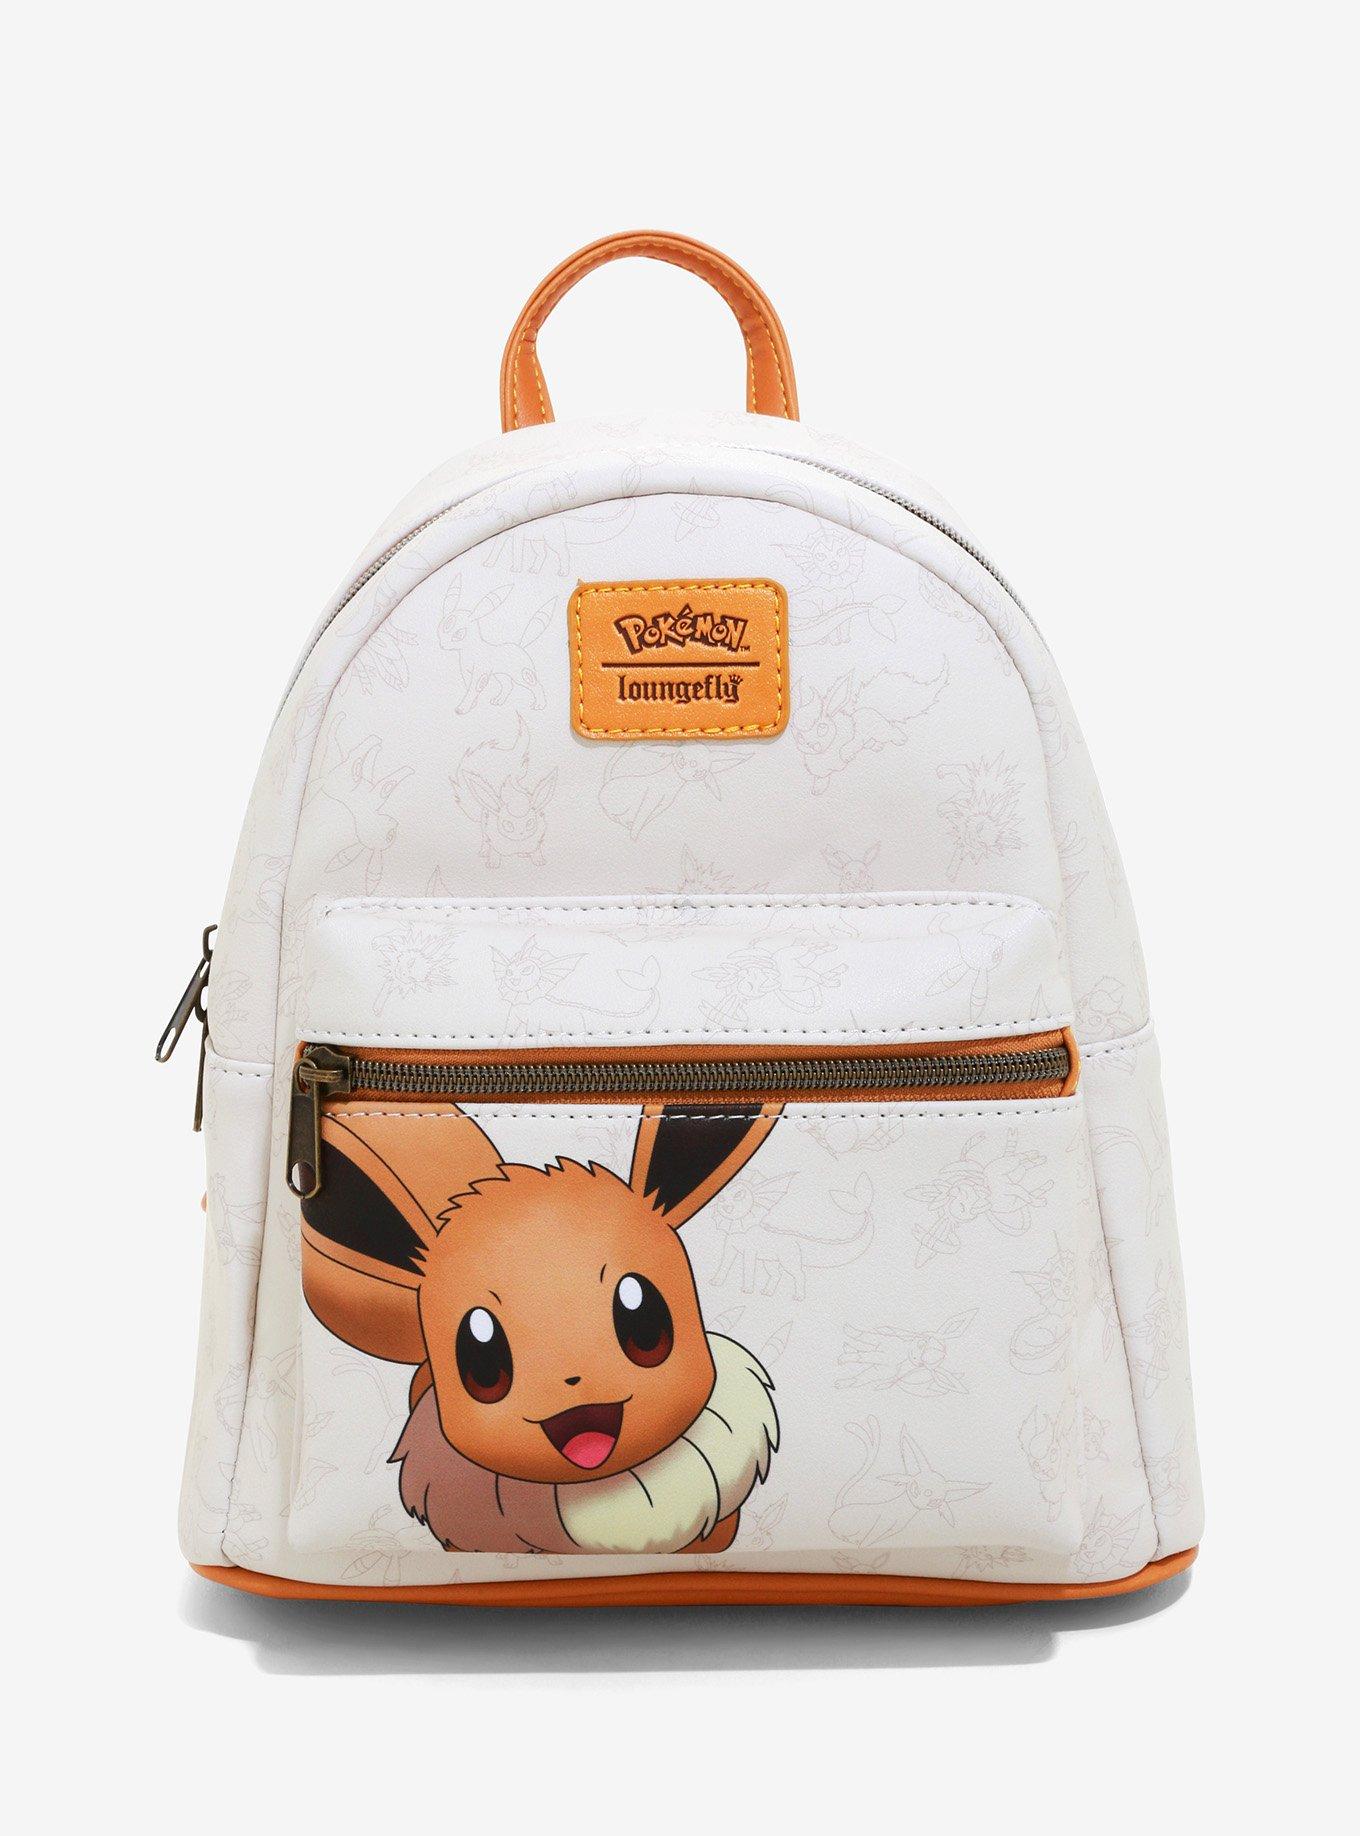 EXCLUSIVE DROP: Loungefly Pokemon Eeveelutions Mini Backpack - 7/6